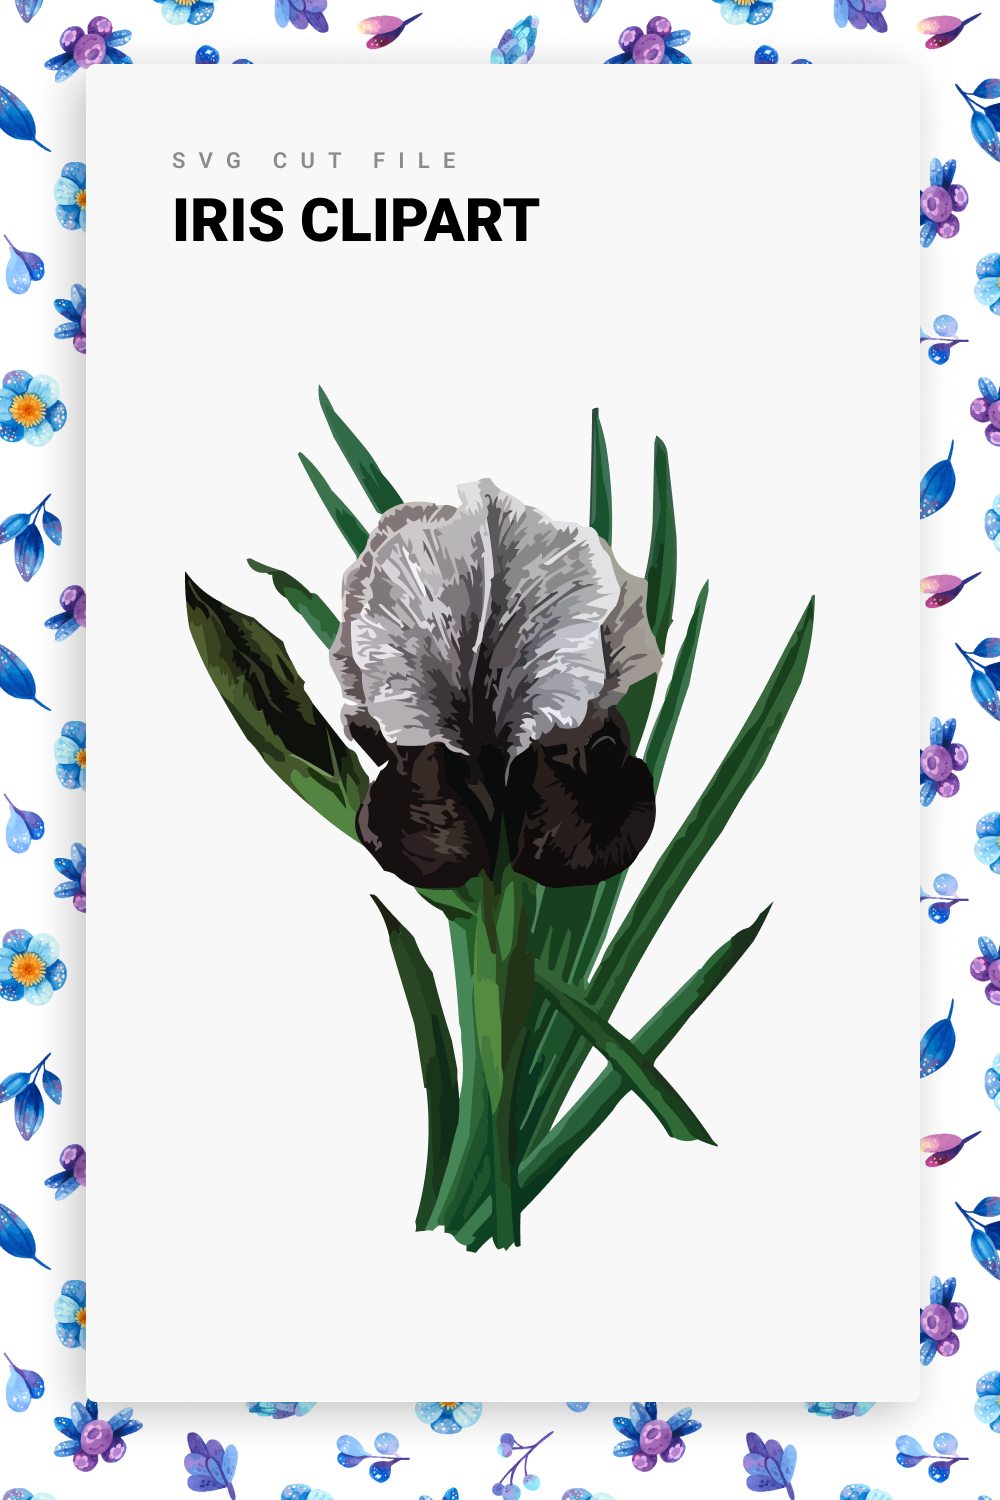 So relistic beautiful iris flower.